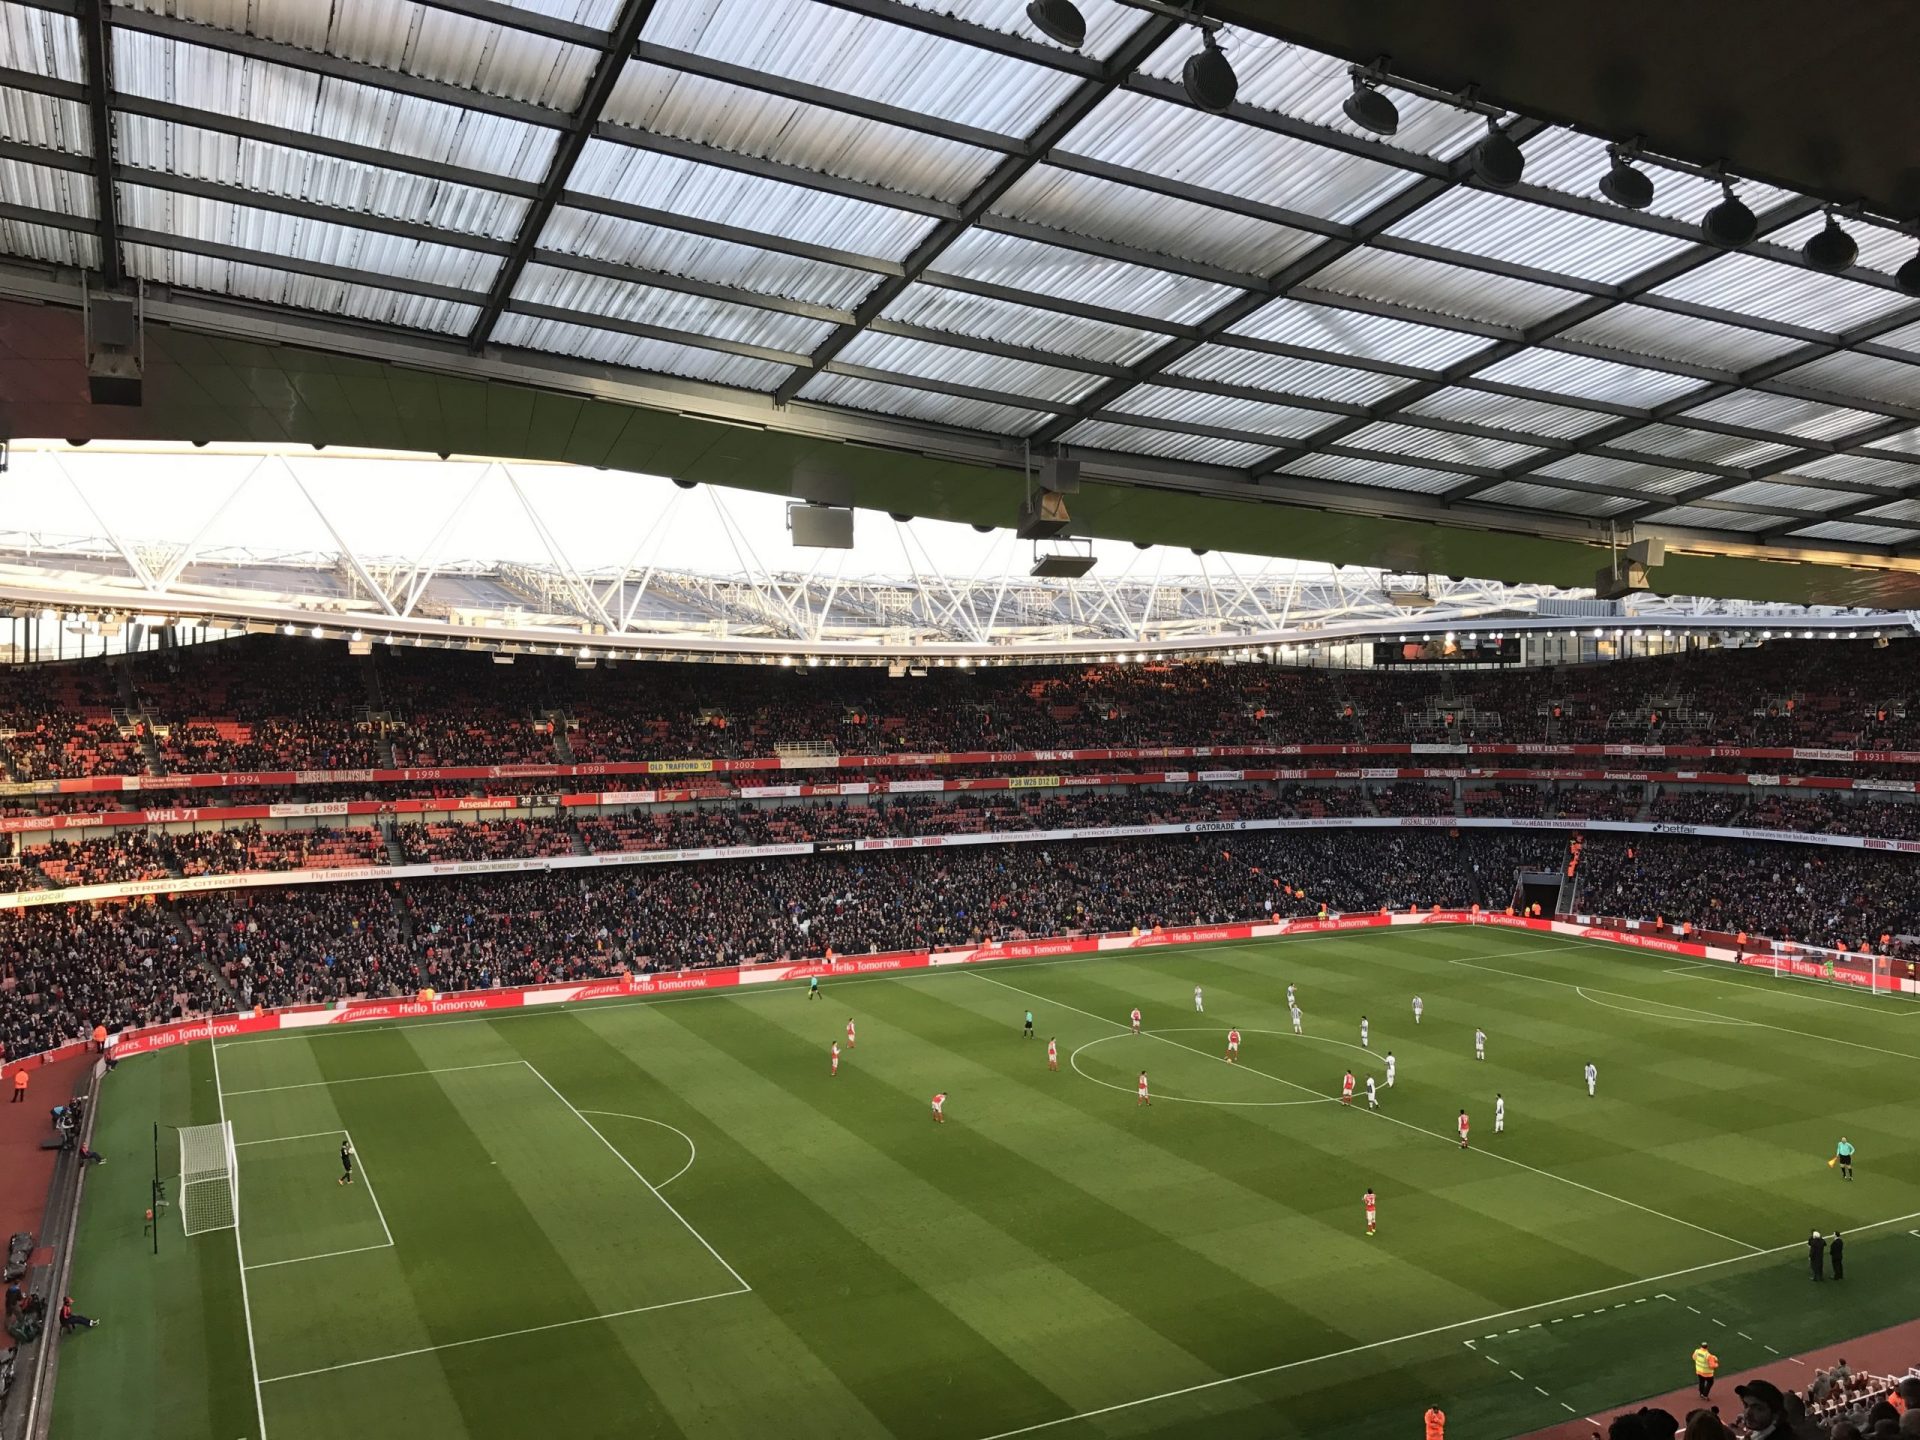 emirates stadium arsenal attending a match tickets scaled - Attending an Arsenal Match at Emirates Stadium